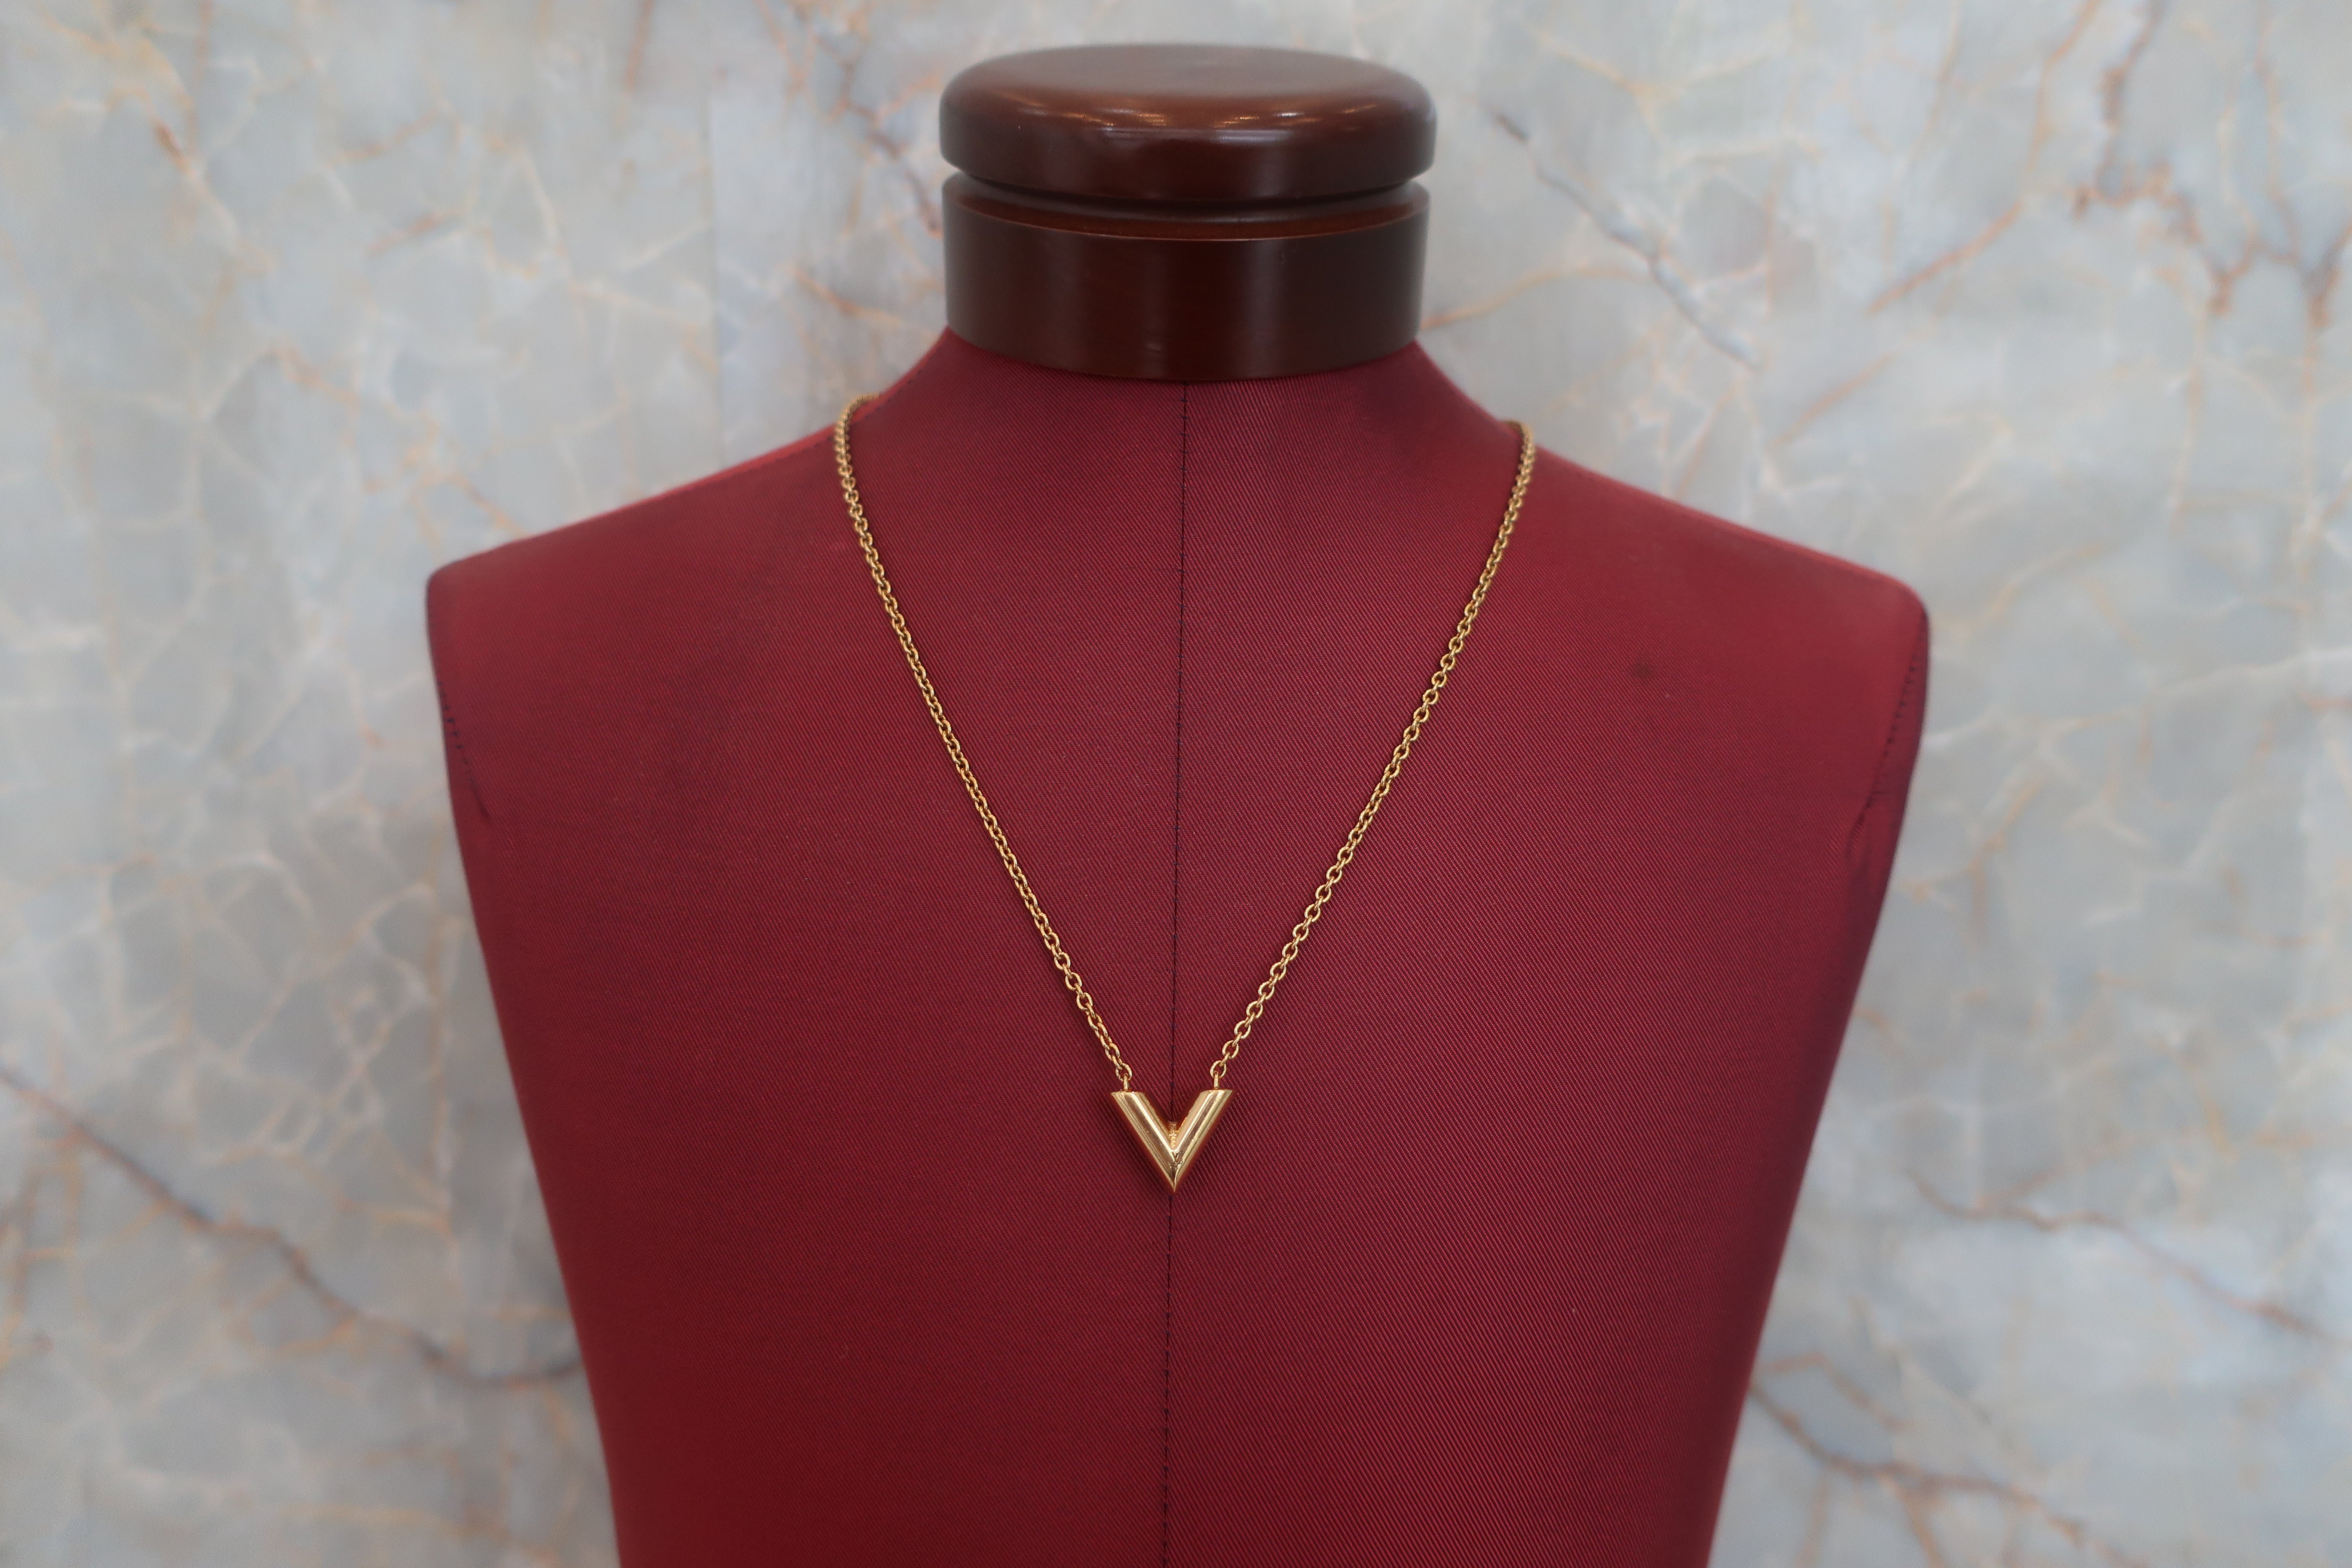 Louis Vuitton, Jewelry, Louis Vuitton Gold Essential V Necklace